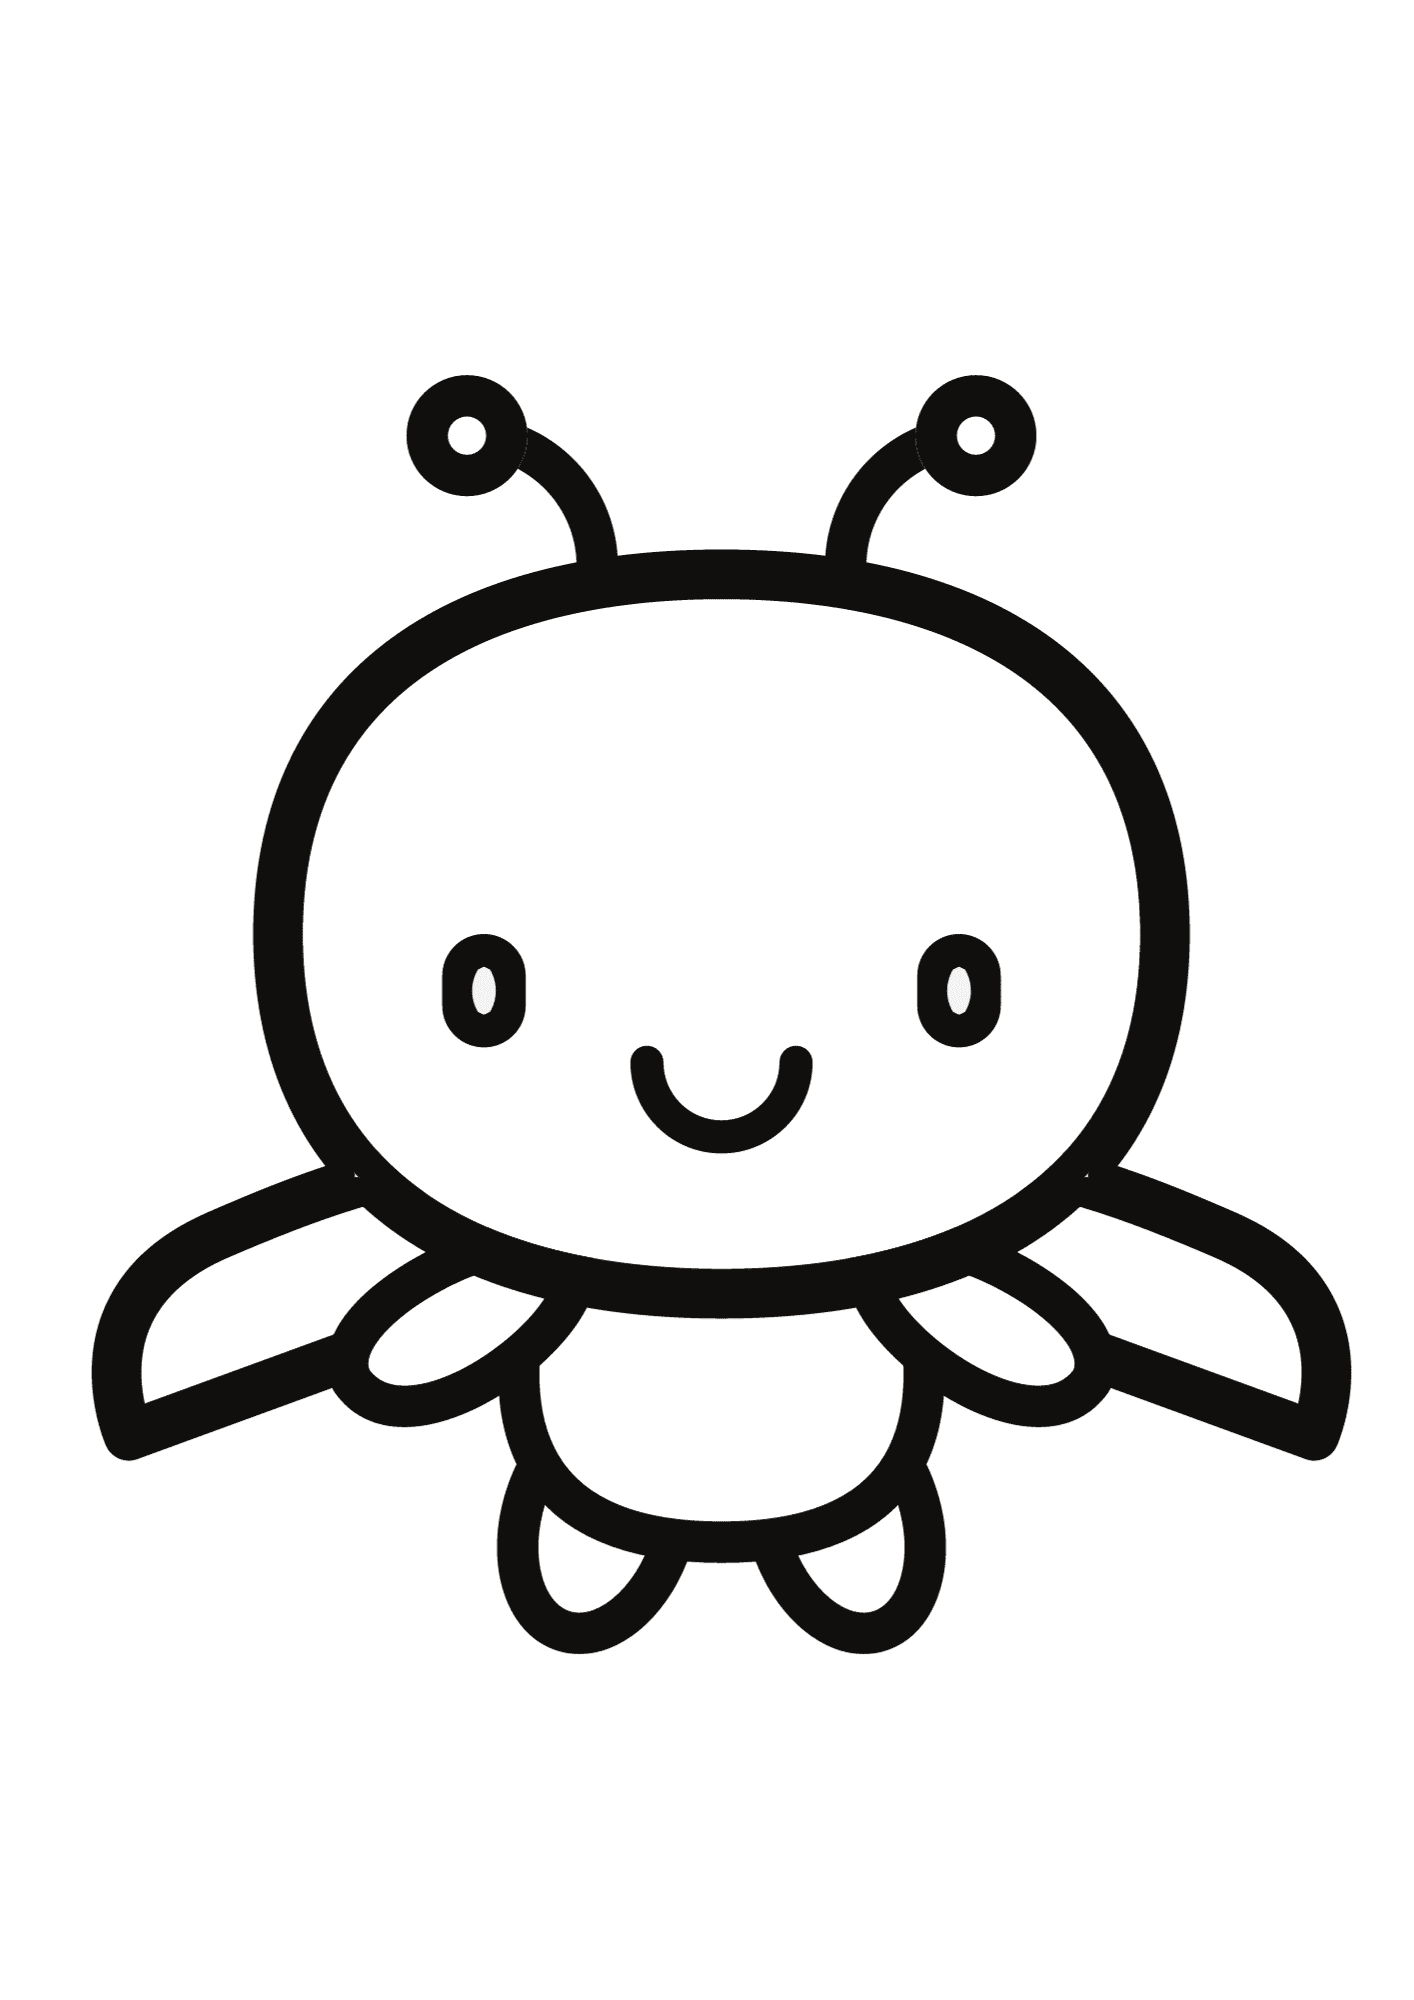 Beetle Cartoon Icon Coloring Page